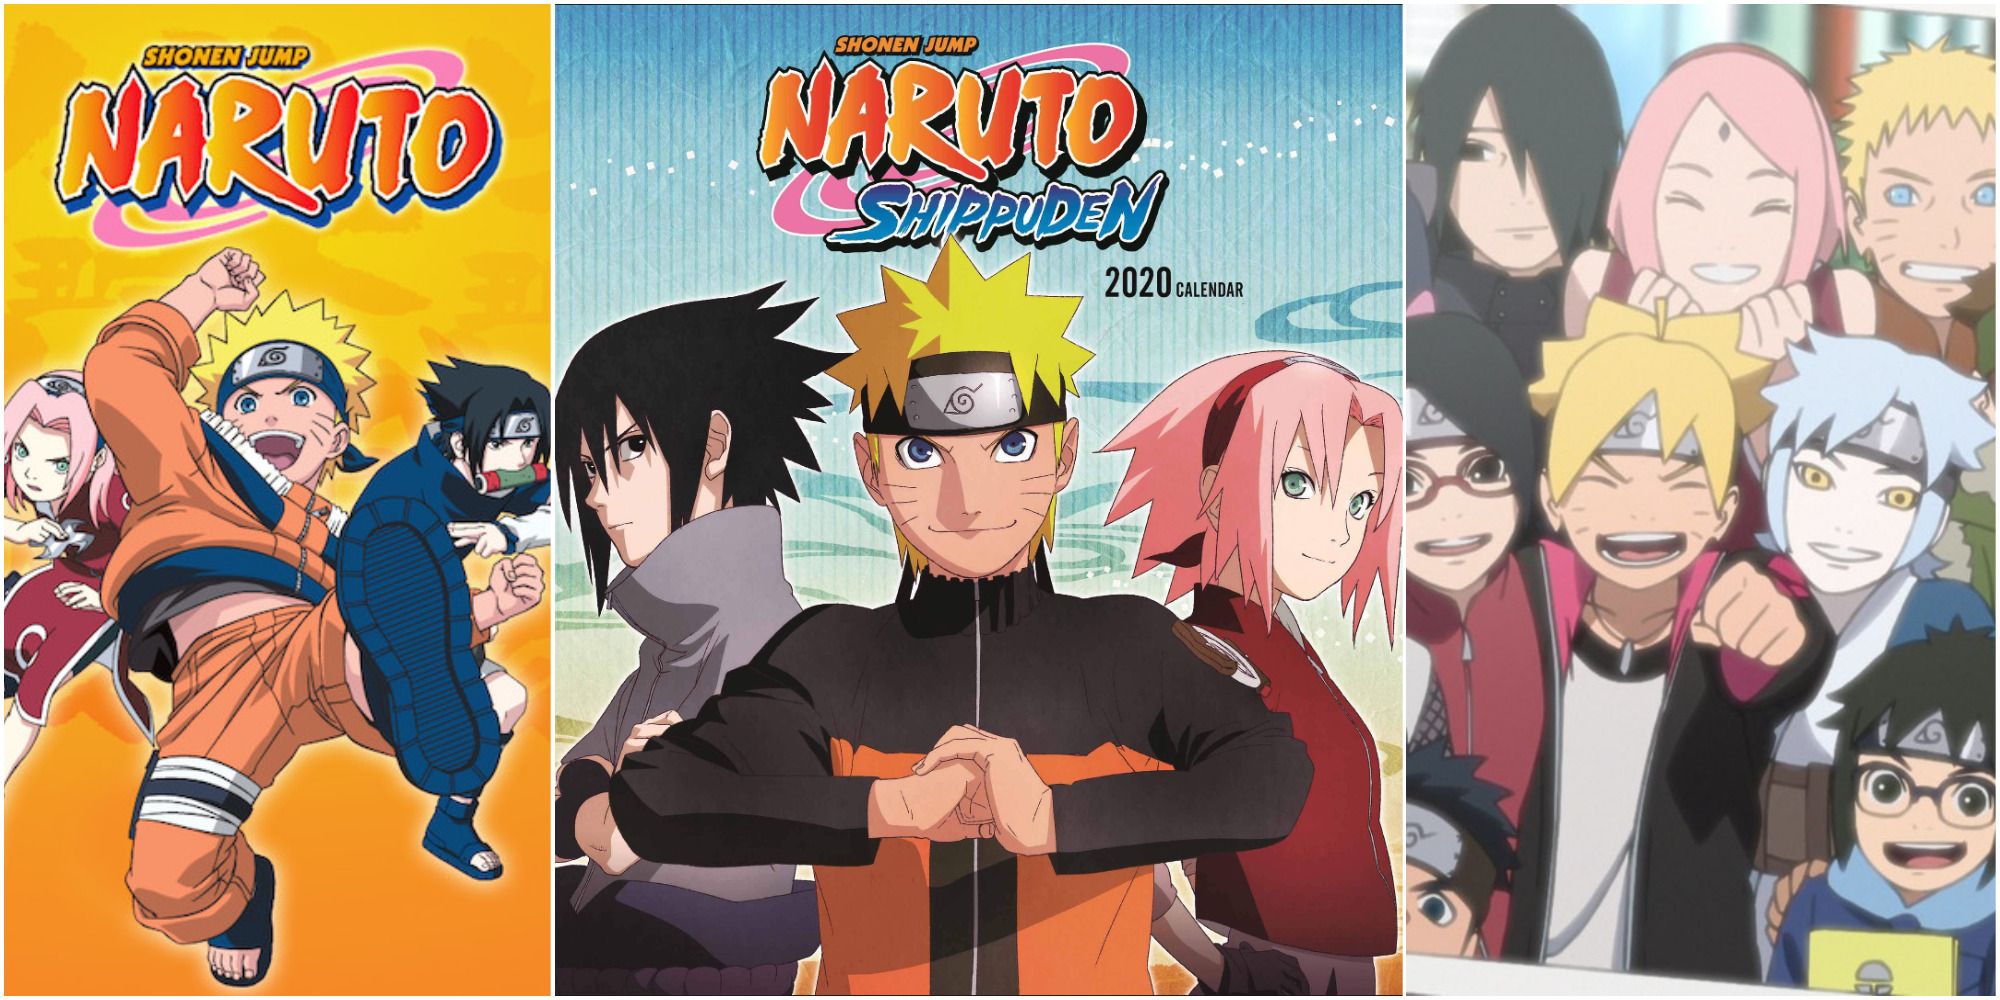 Naruto Team 7 through the ages